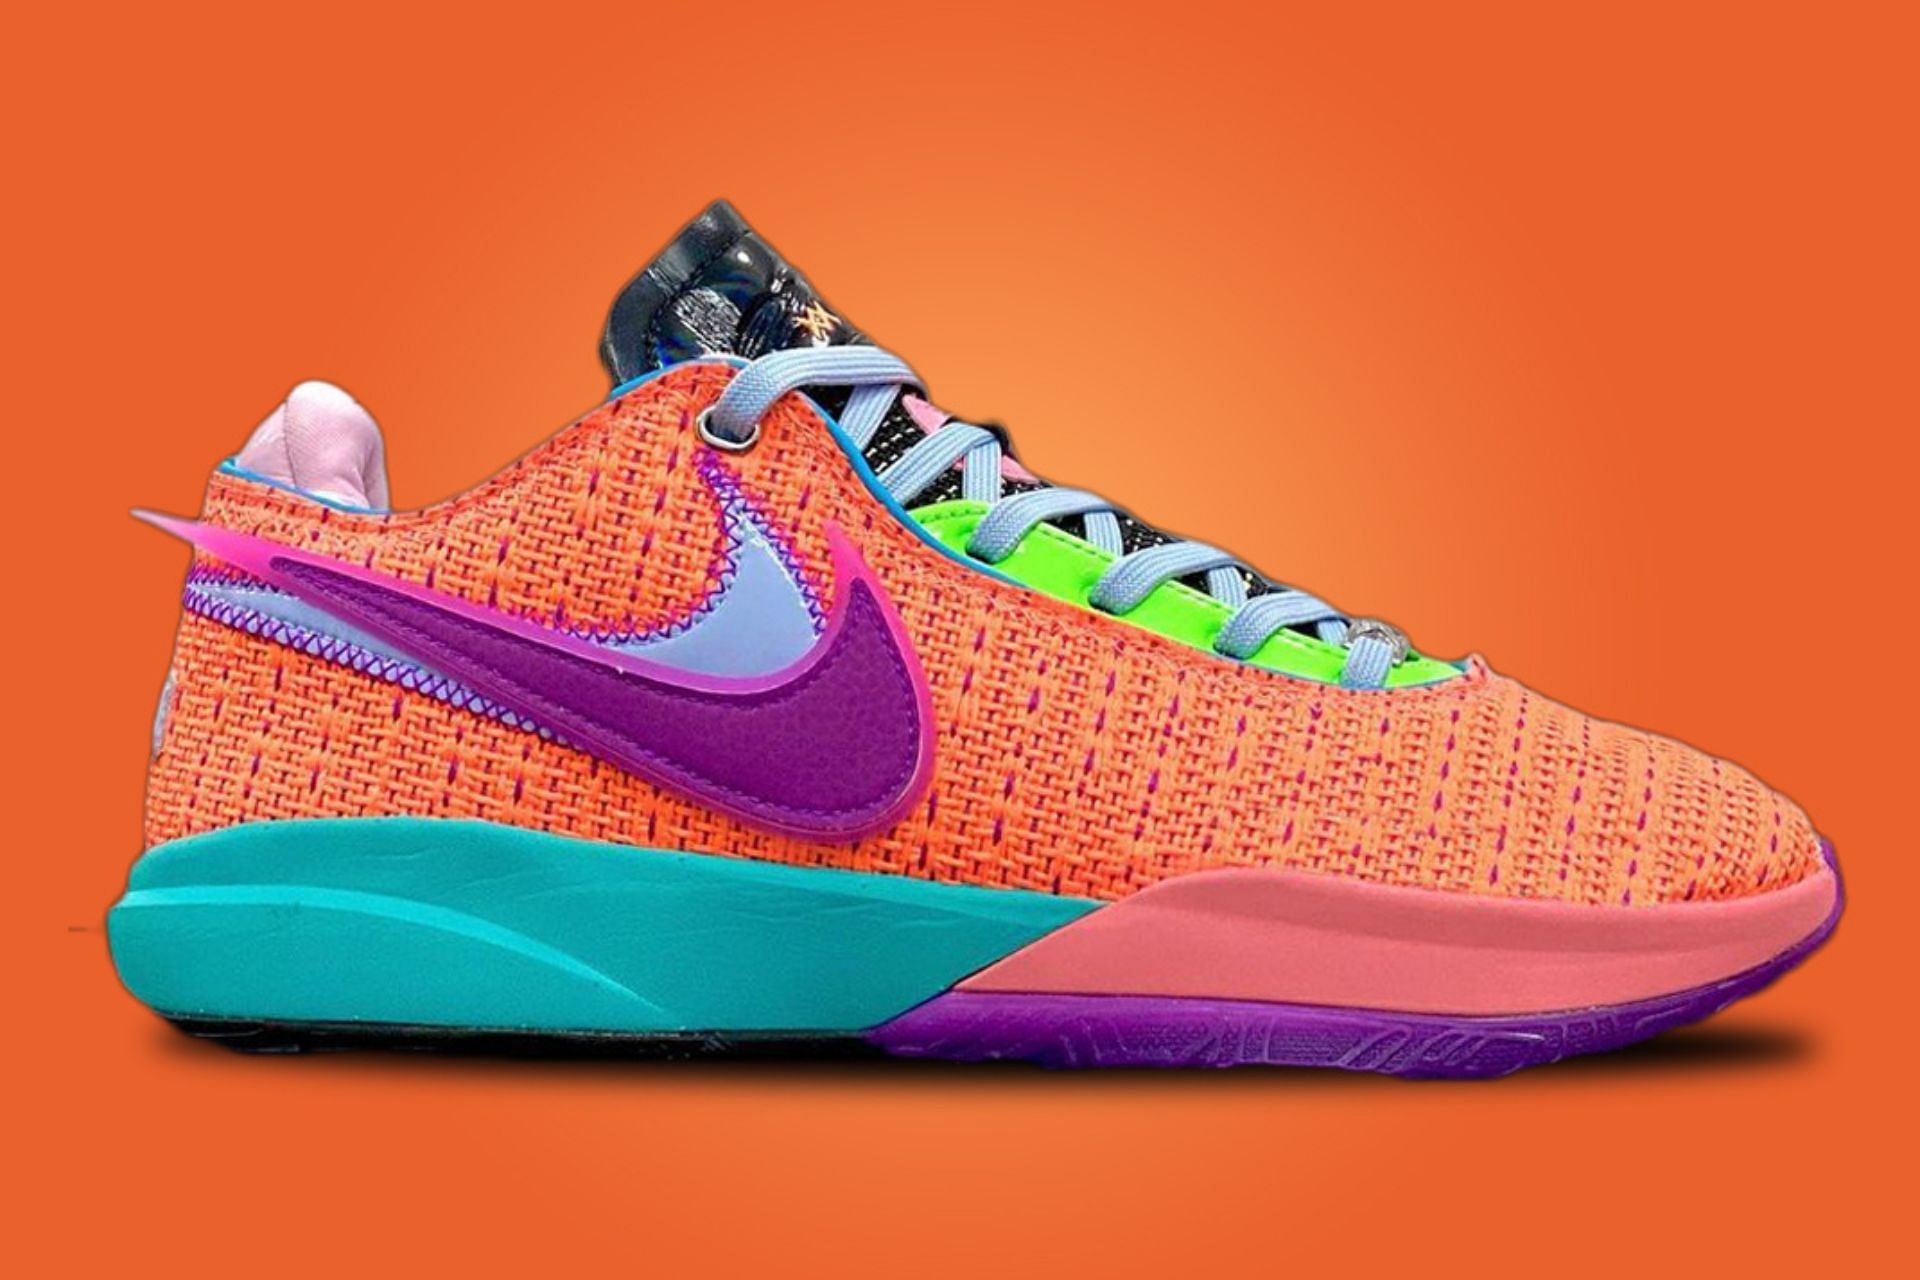 Take a closer look at the upcoming Nike LeBron 20 Chosen 1 colorway (Image via Instagram/@kicksdong)